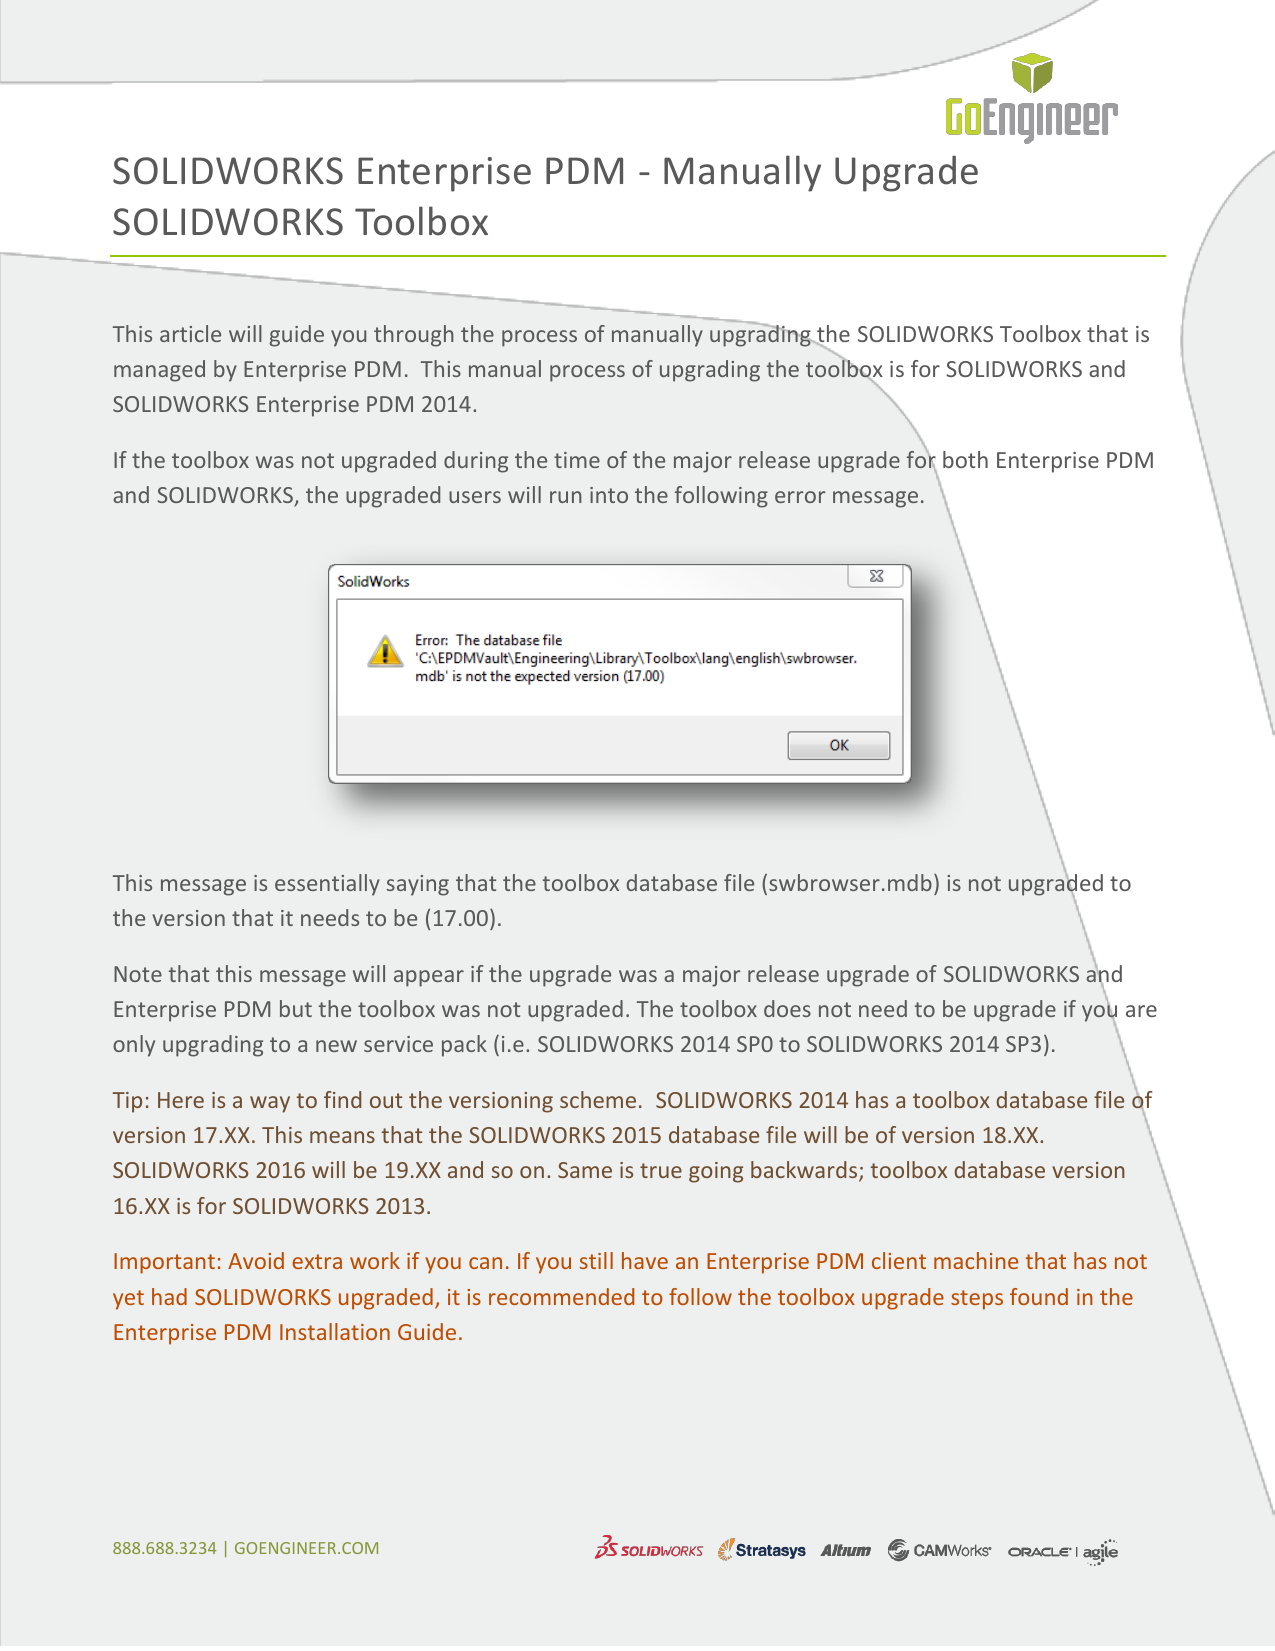 solidworks swbrowser.mdb download